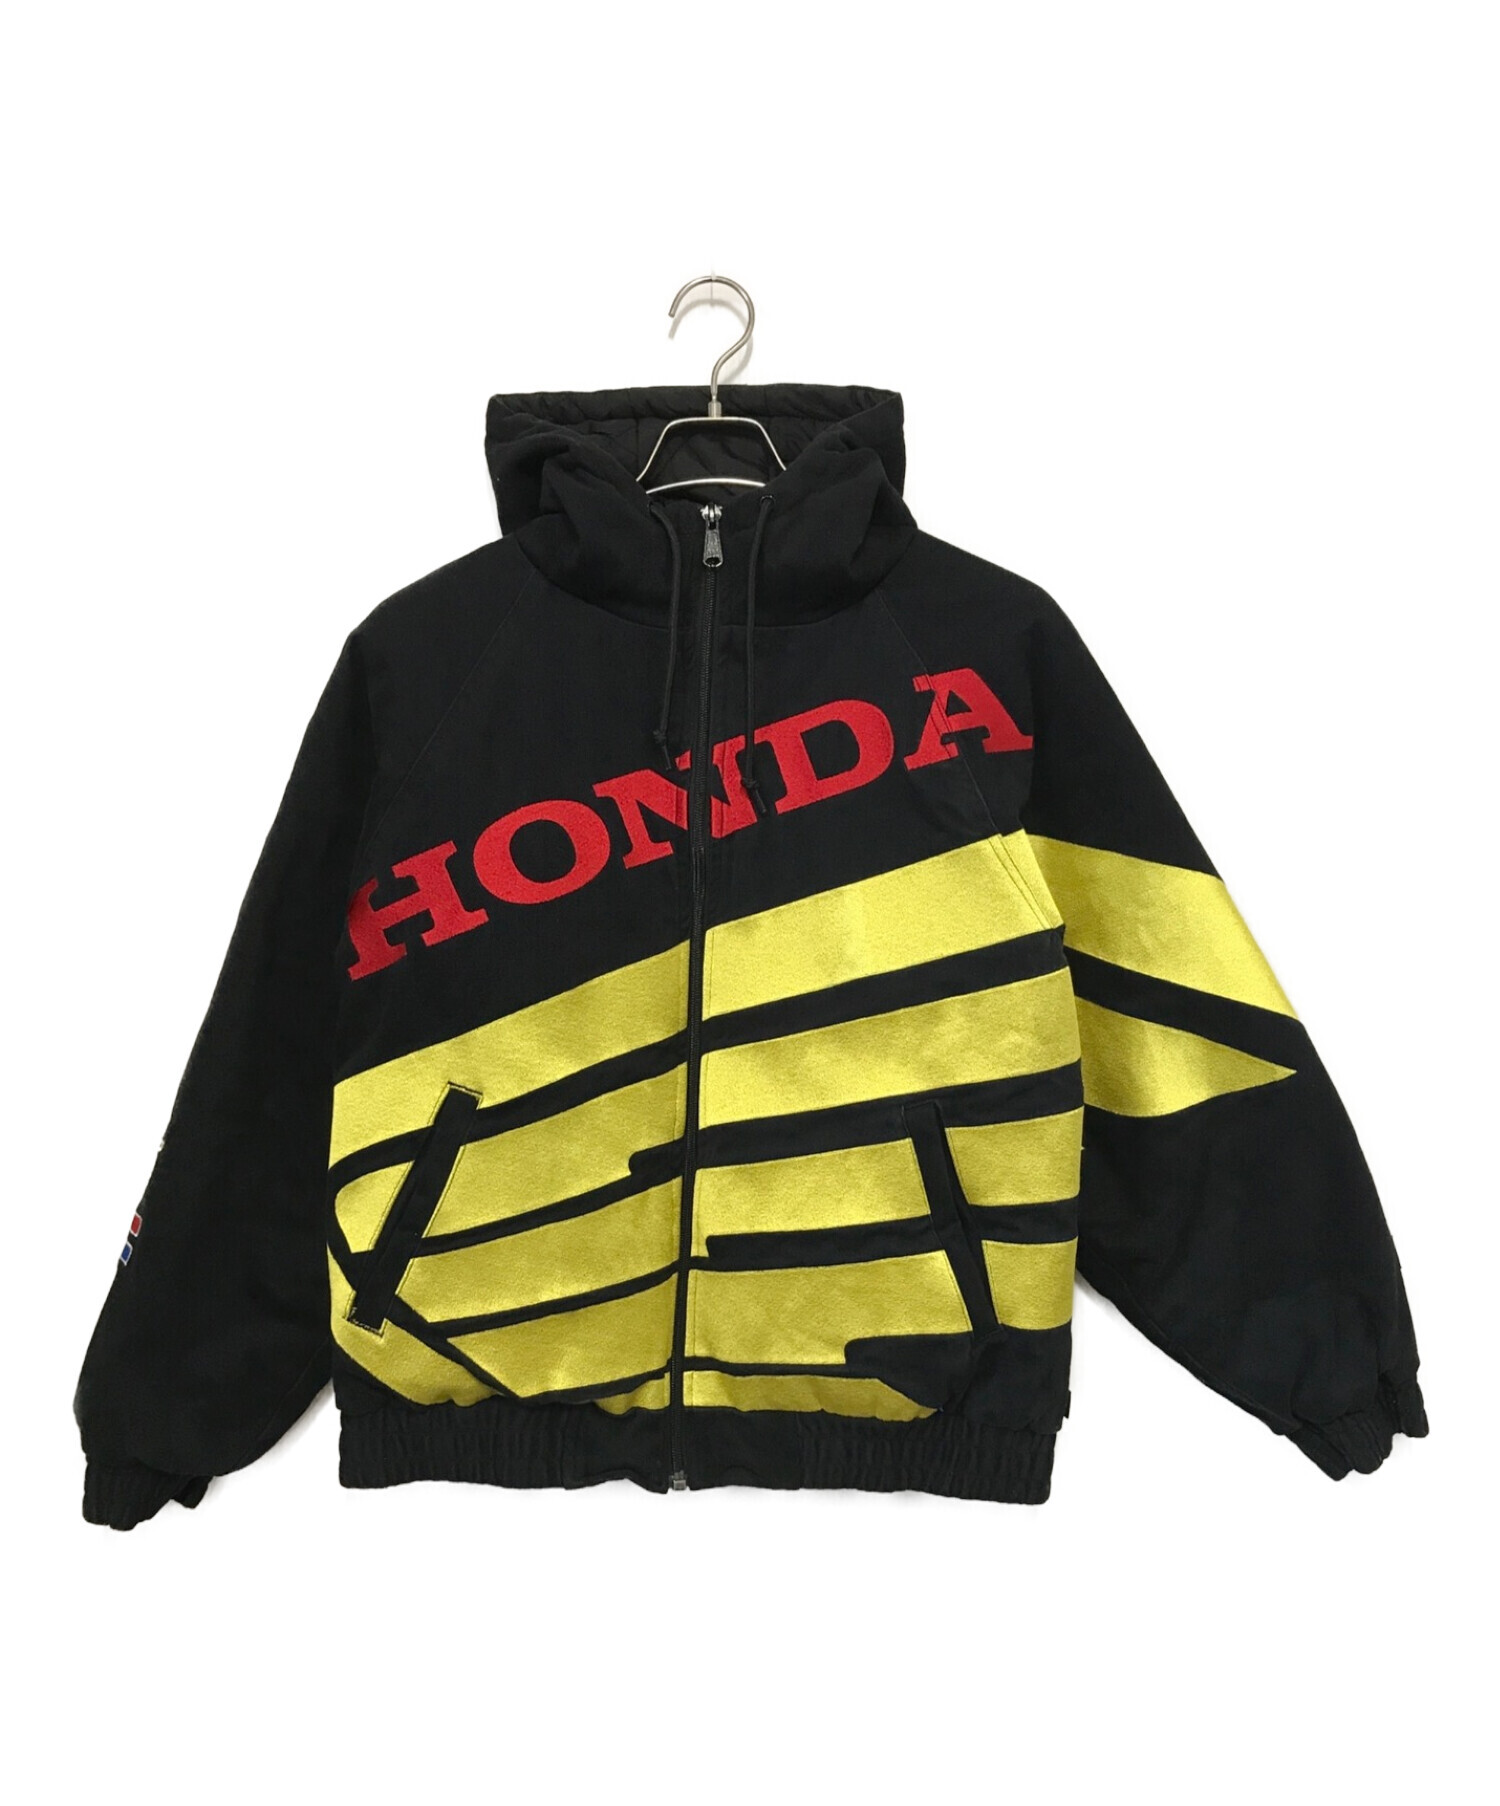 SUPREME (シュプリーム) HONDA (ホンダ) Fox Racing Puffy Zip Up Jacket ブラック サイズ:Ｓ